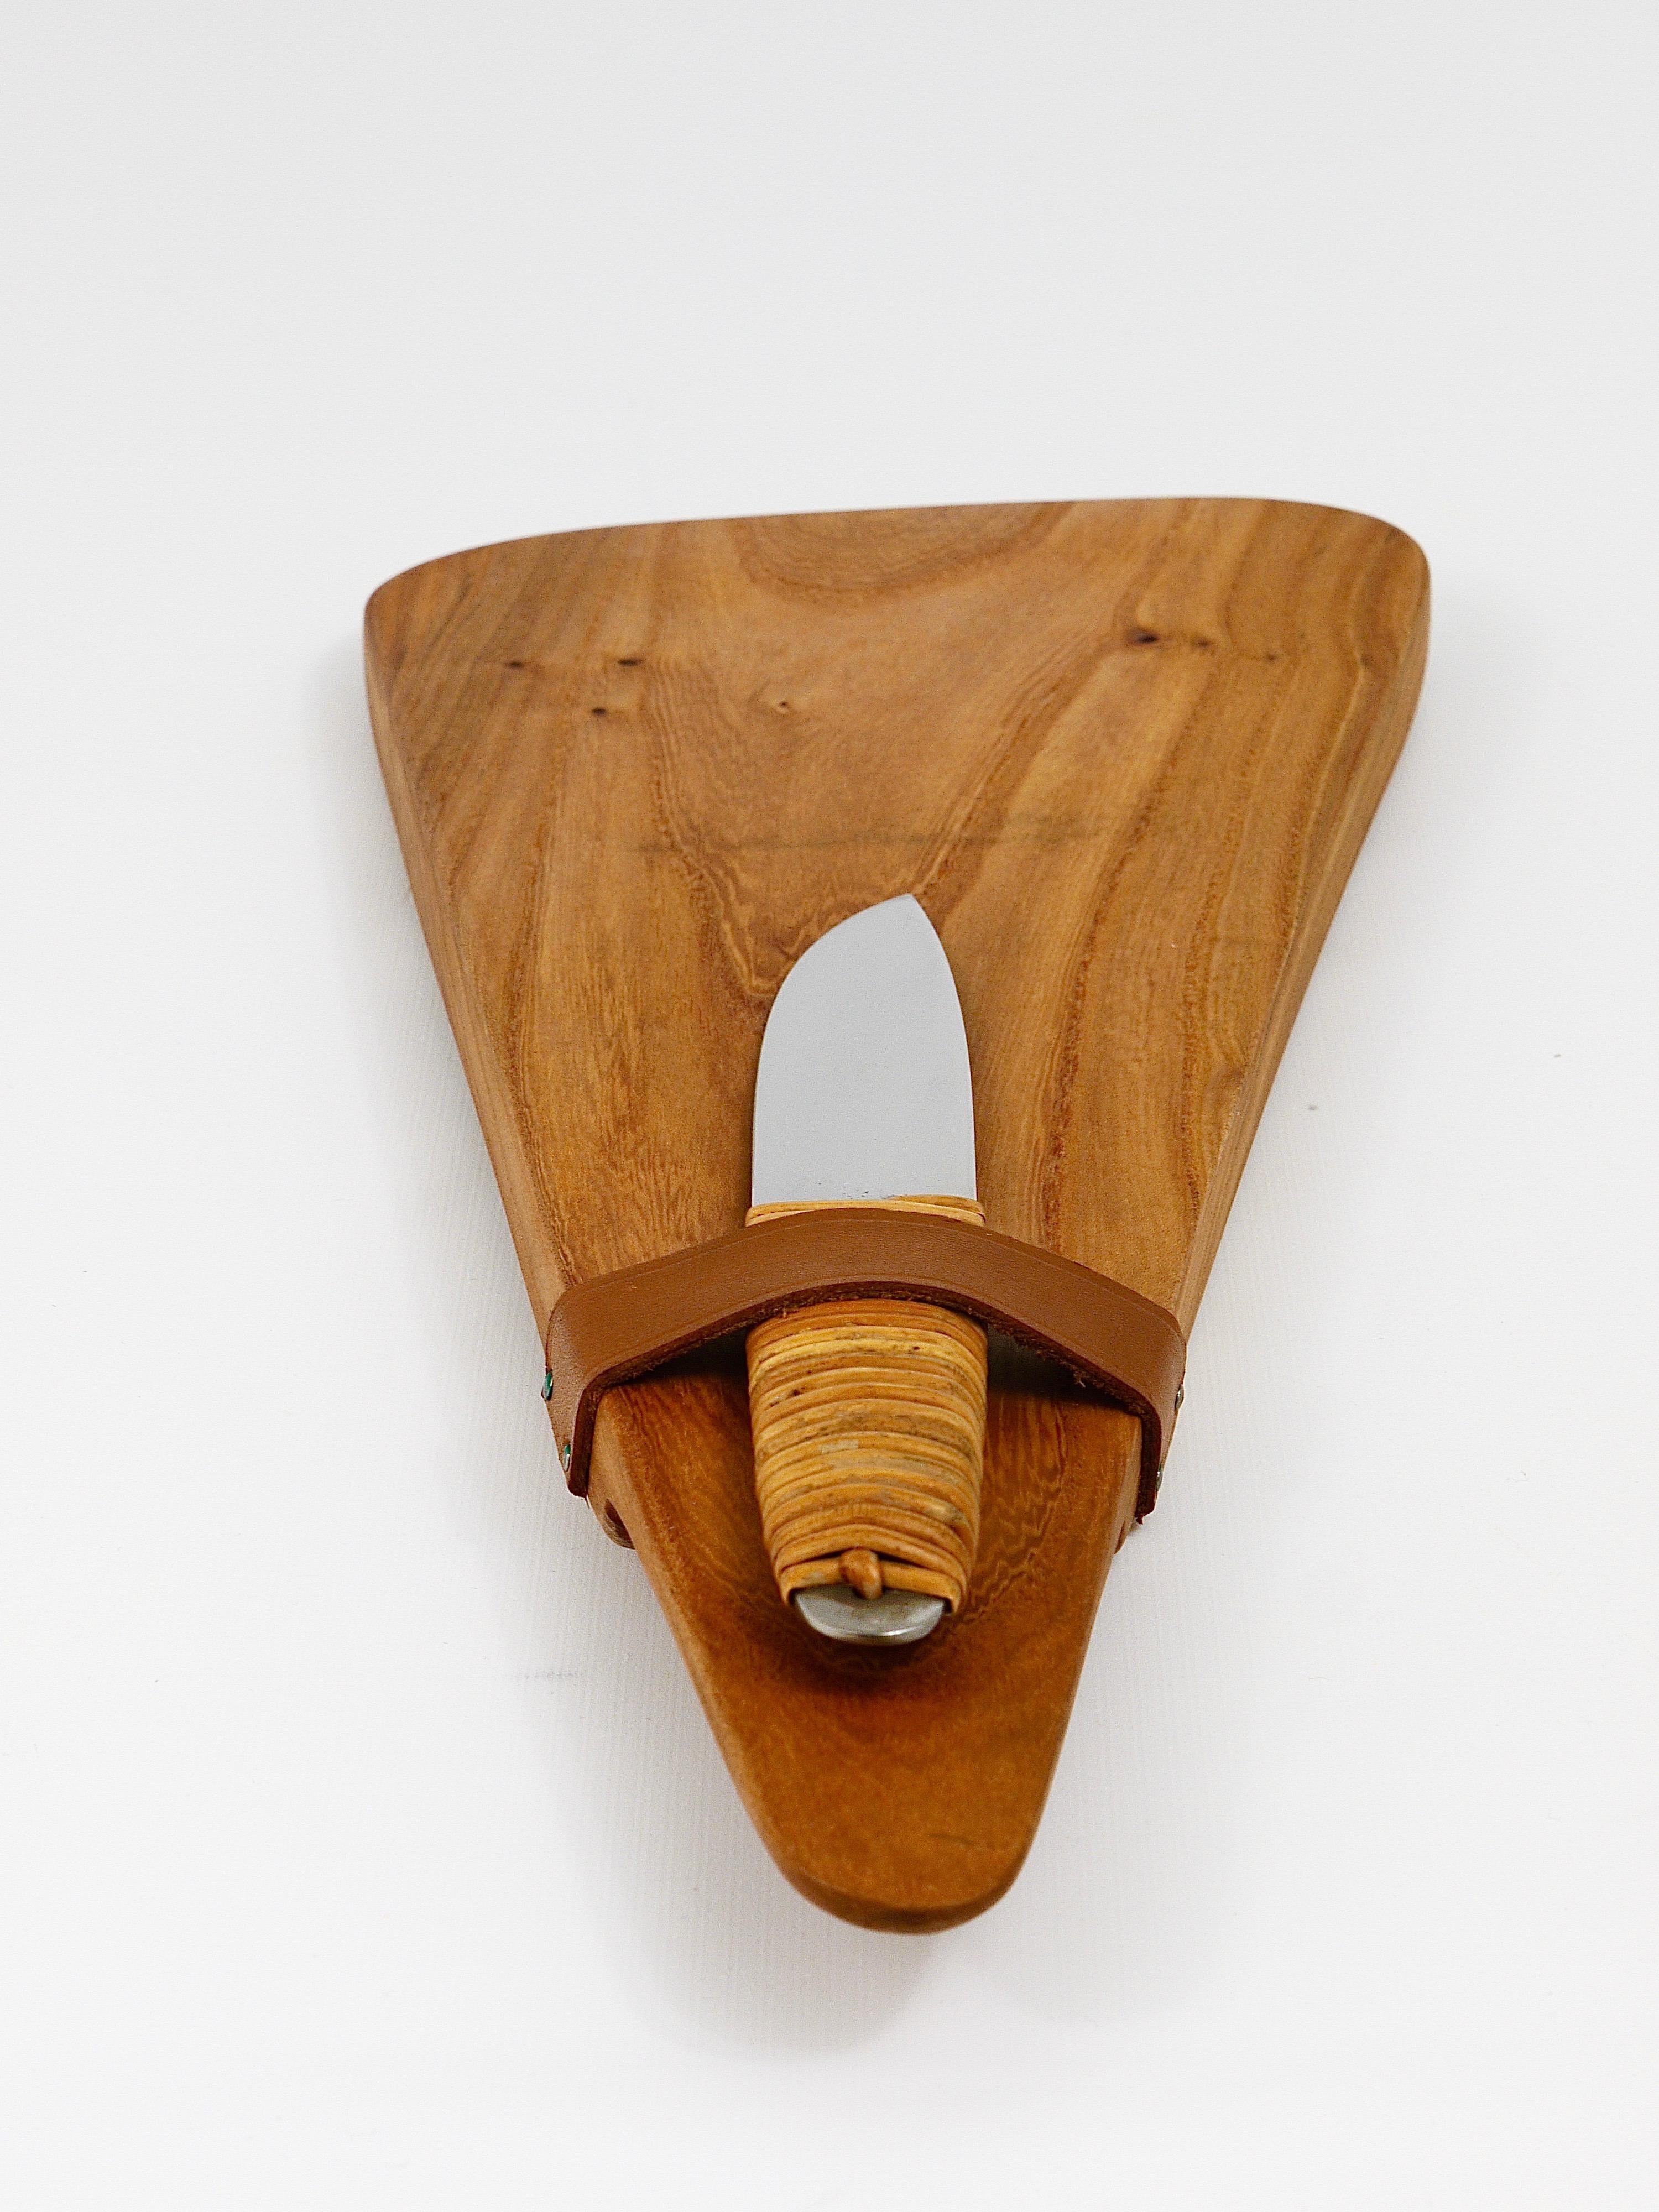 Carl Aubock Triangular Walnut Cutting Board with Wickerwork Handle Knife, 1950s For Sale 6